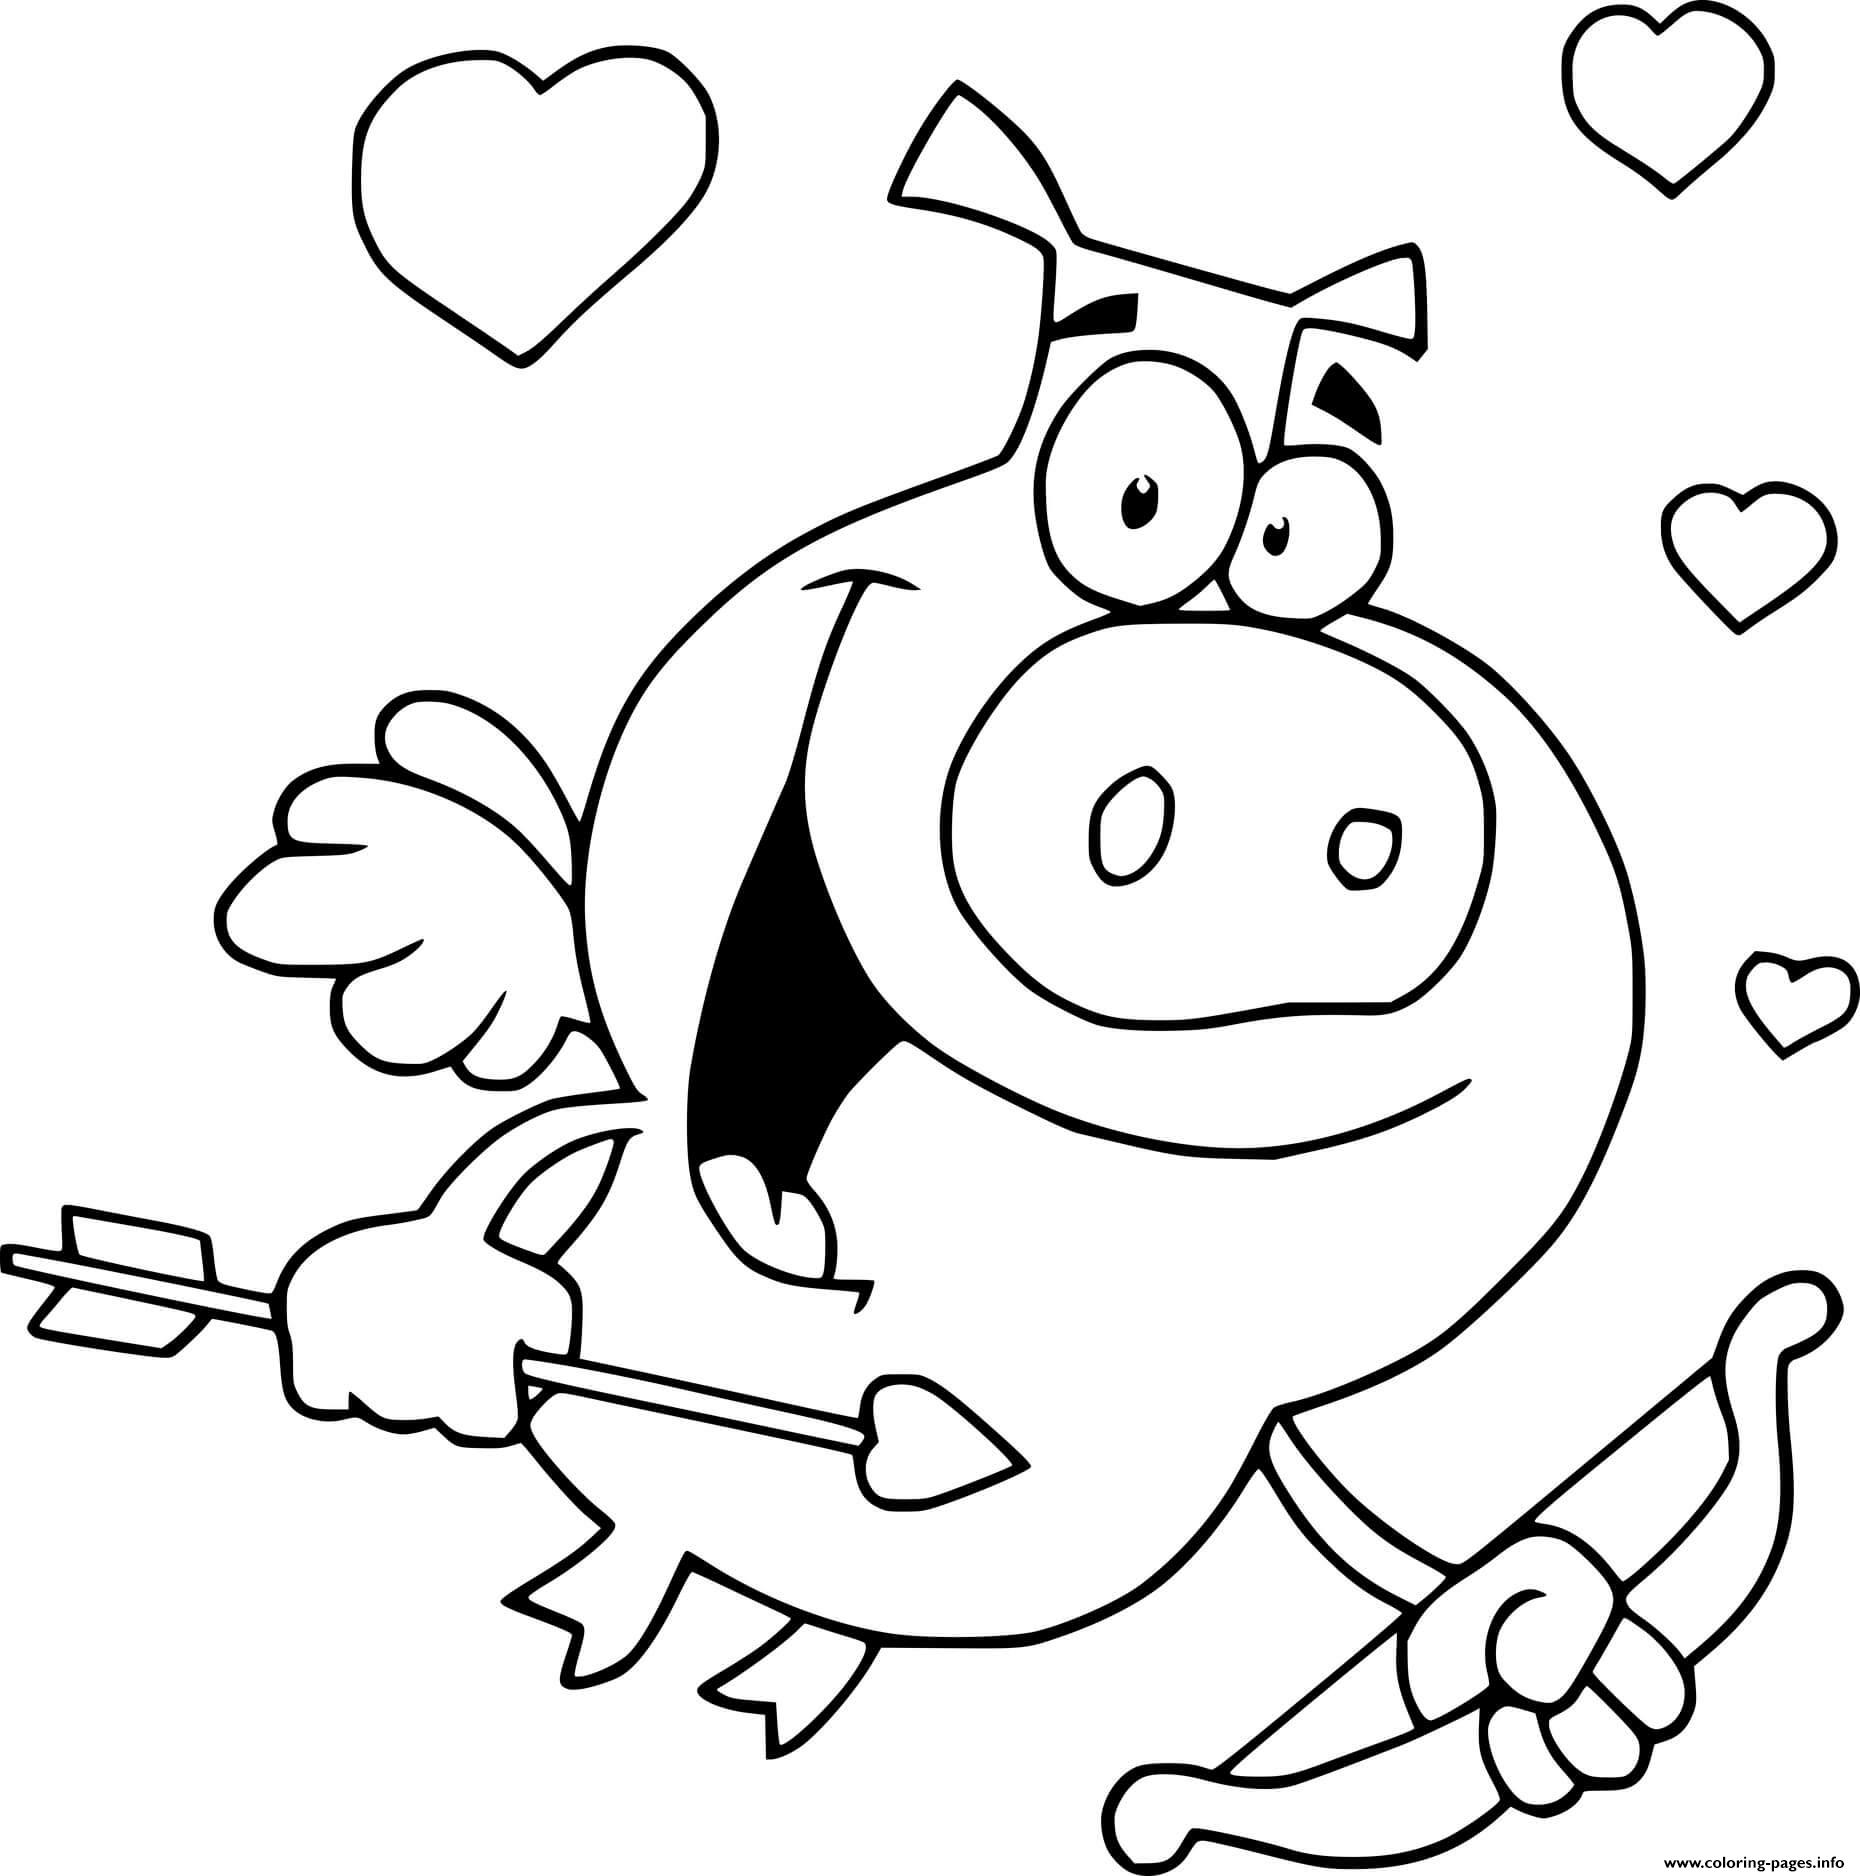 Cupid Pig coloring